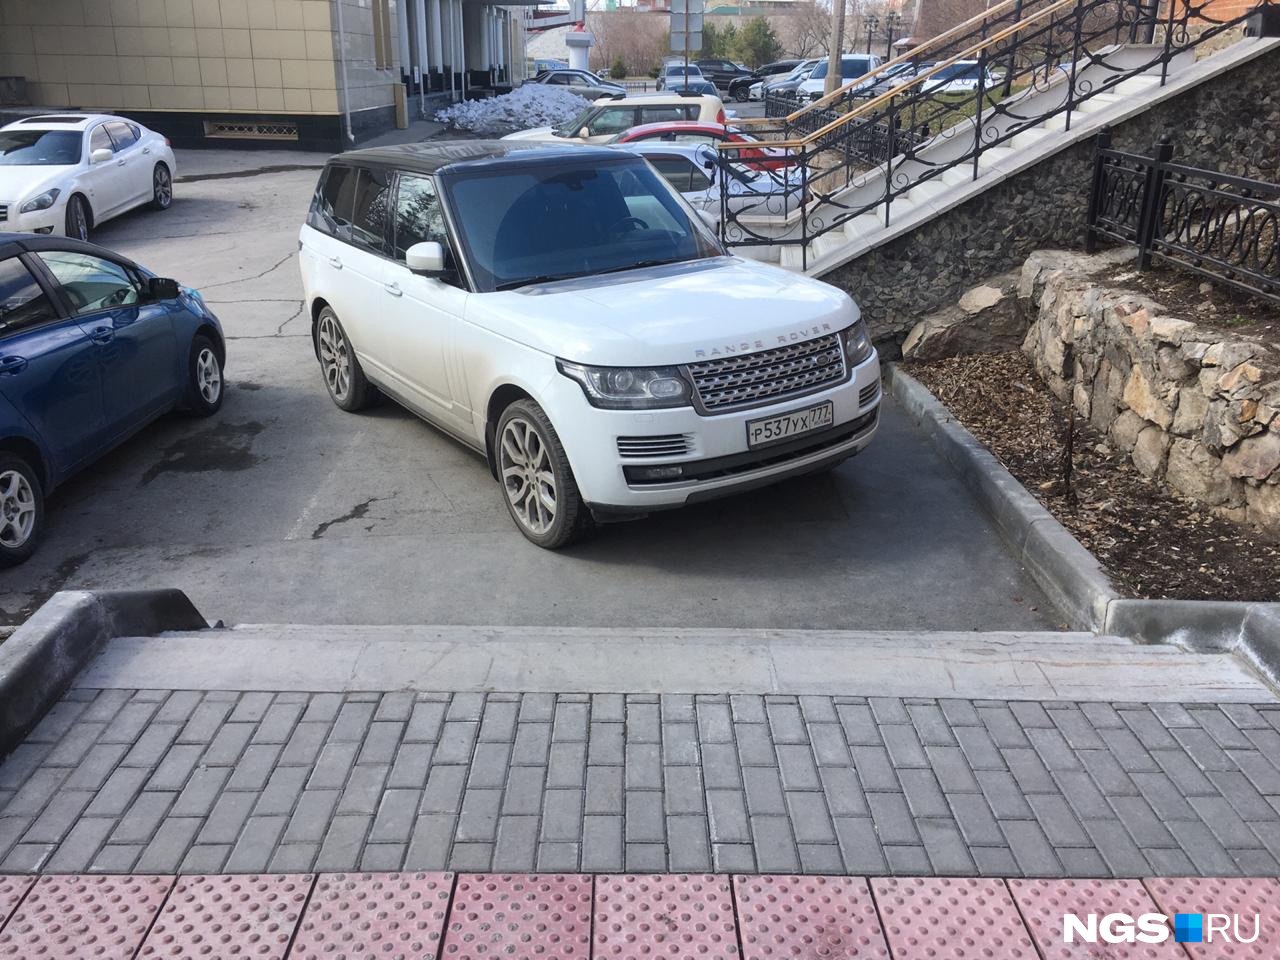 Припаркованный Range Rover